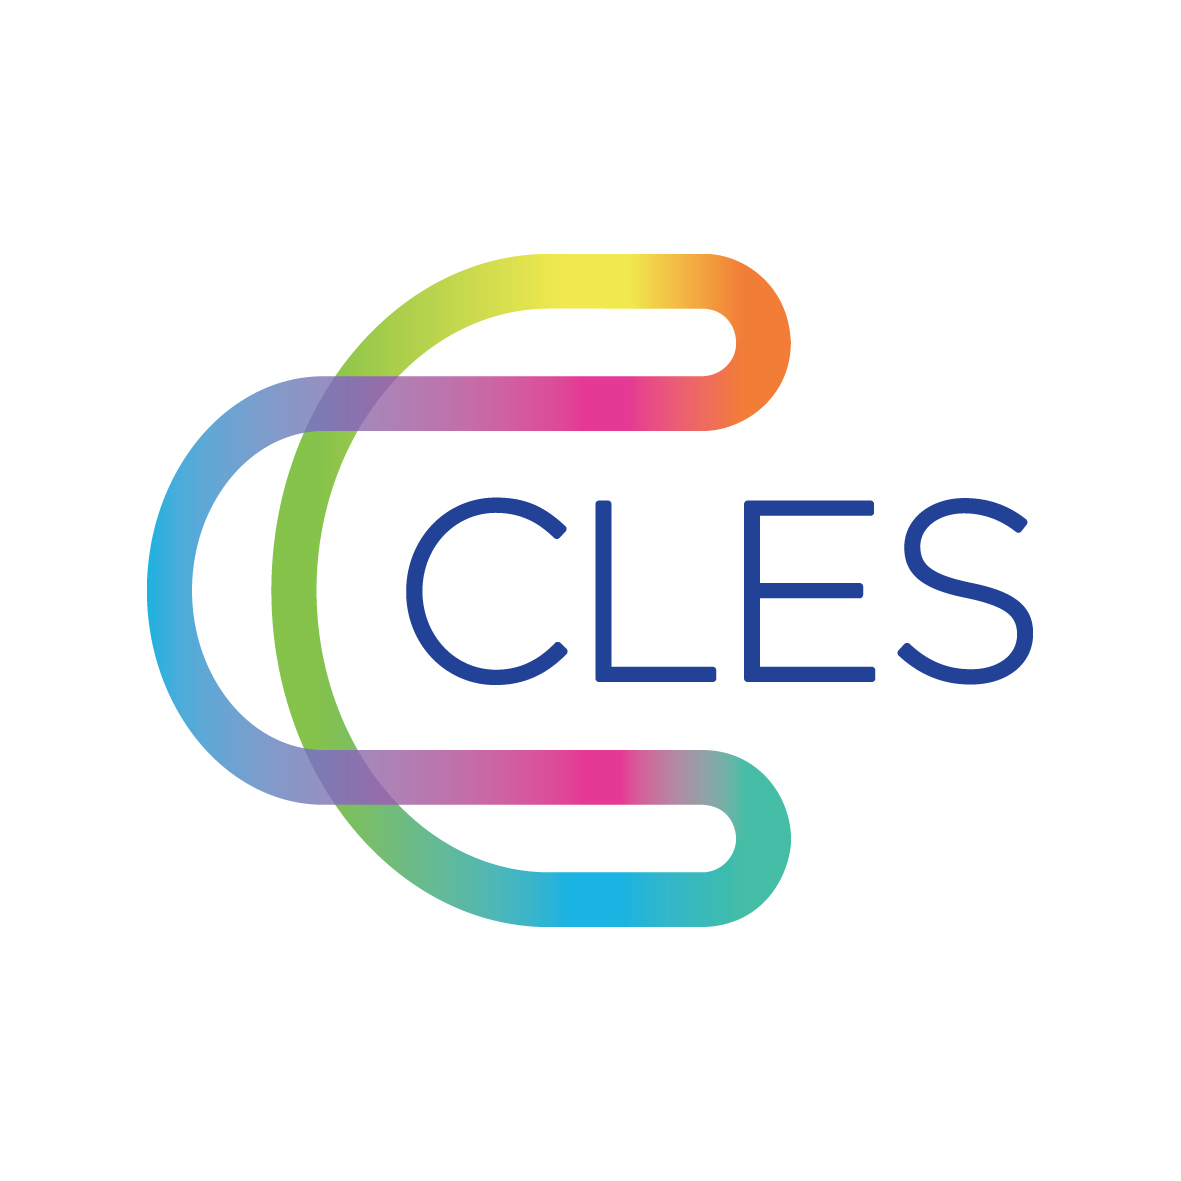 Logo CLES